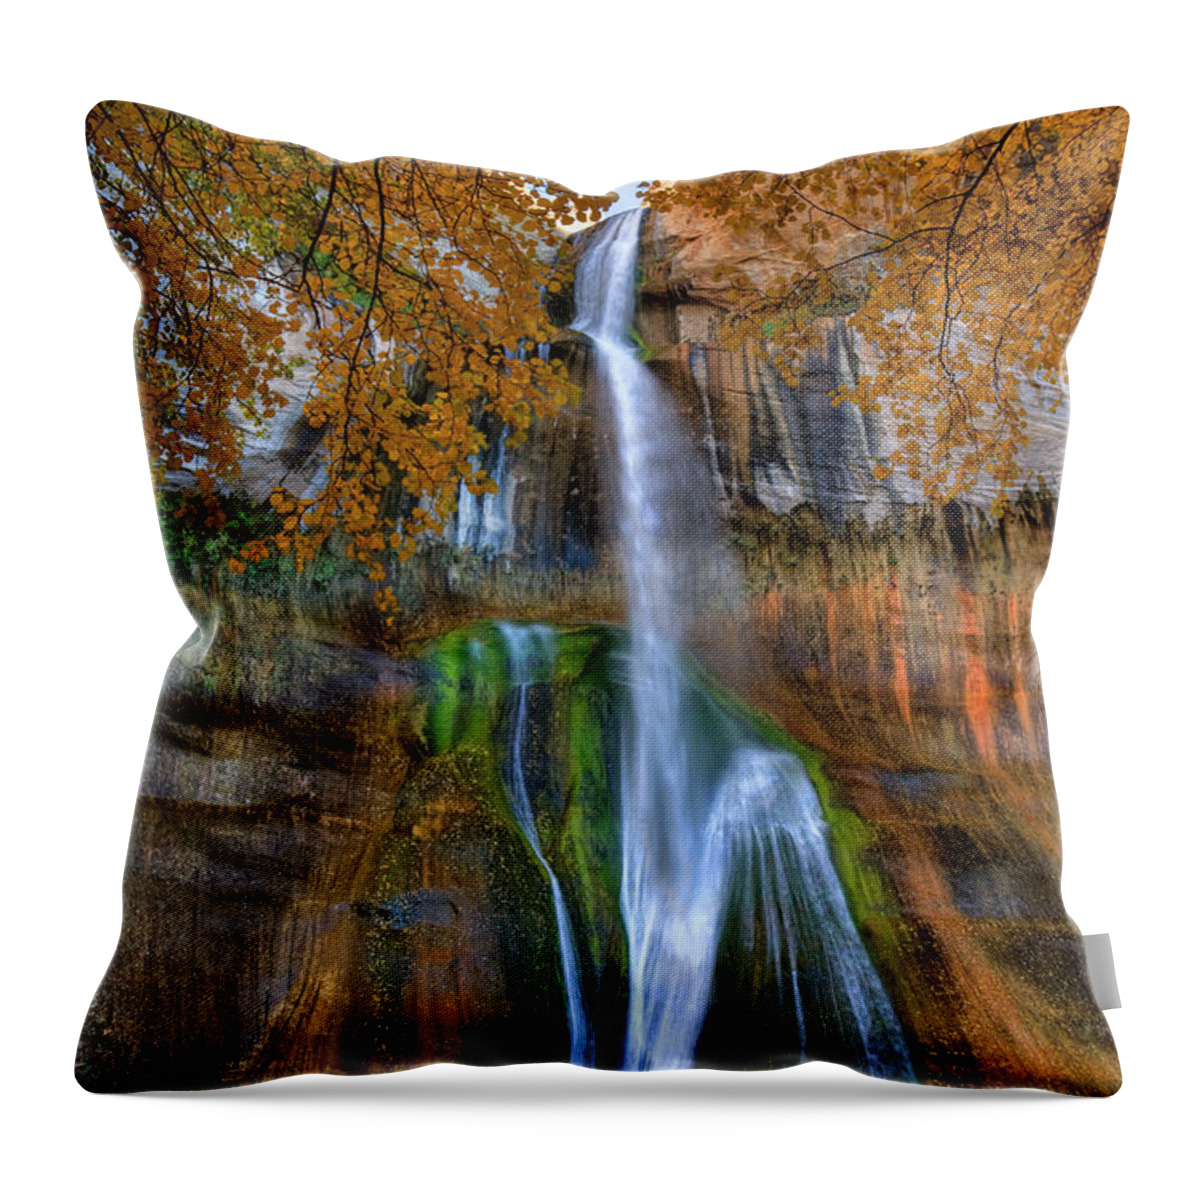 Jeff Foott Throw Pillow featuring the photograph Calf Creek Falls In Utah by Jeff Foott